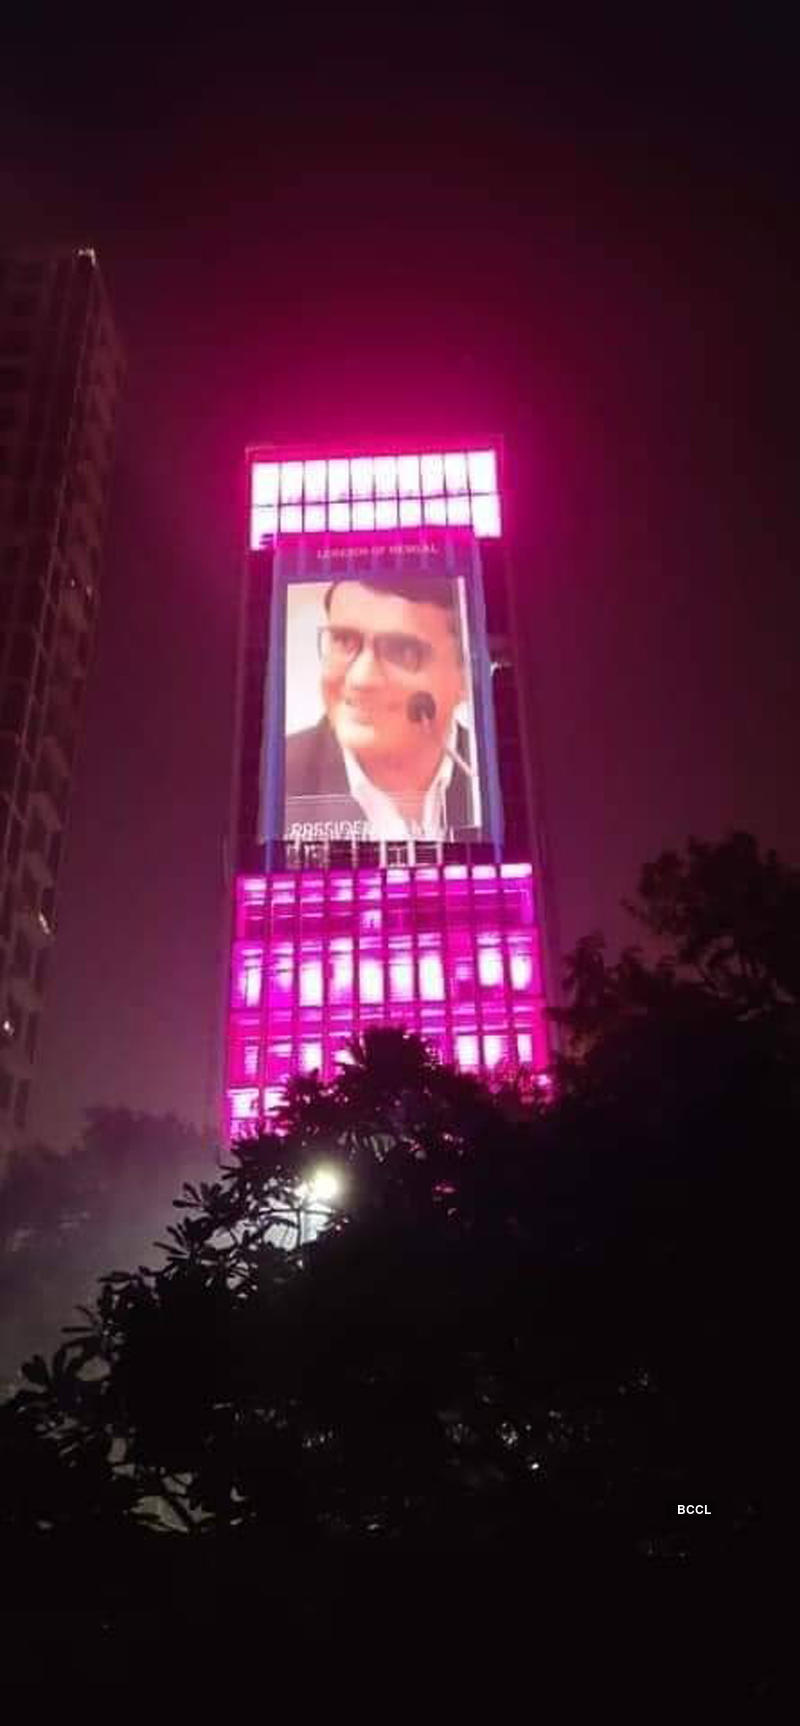 Kolkata turns pink as India embrace day-night test